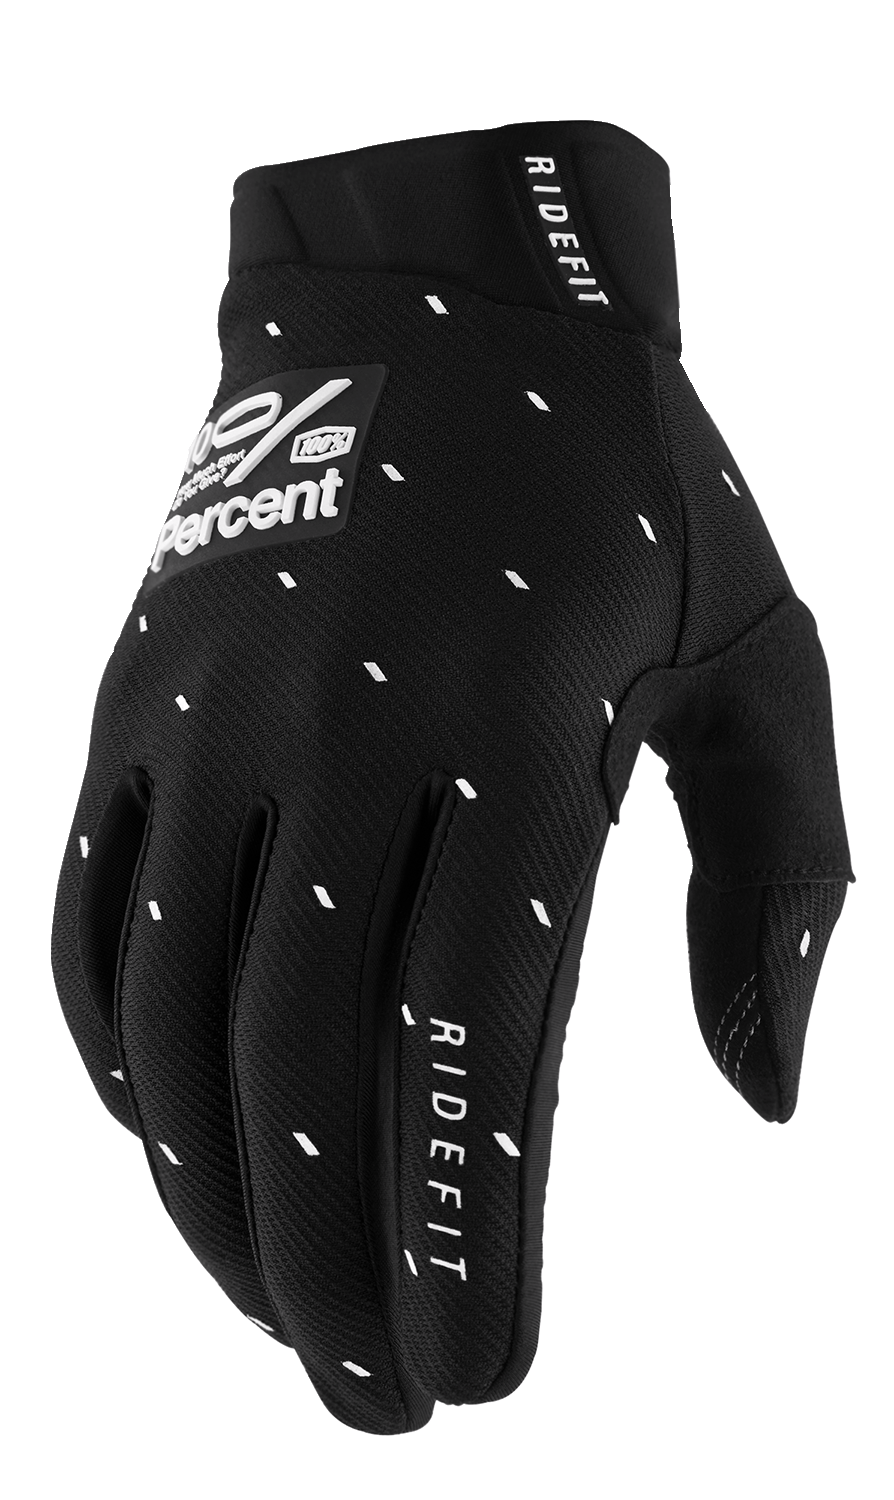 100% Ridefit Gloves - Slasher Black - Medium 10010-00036